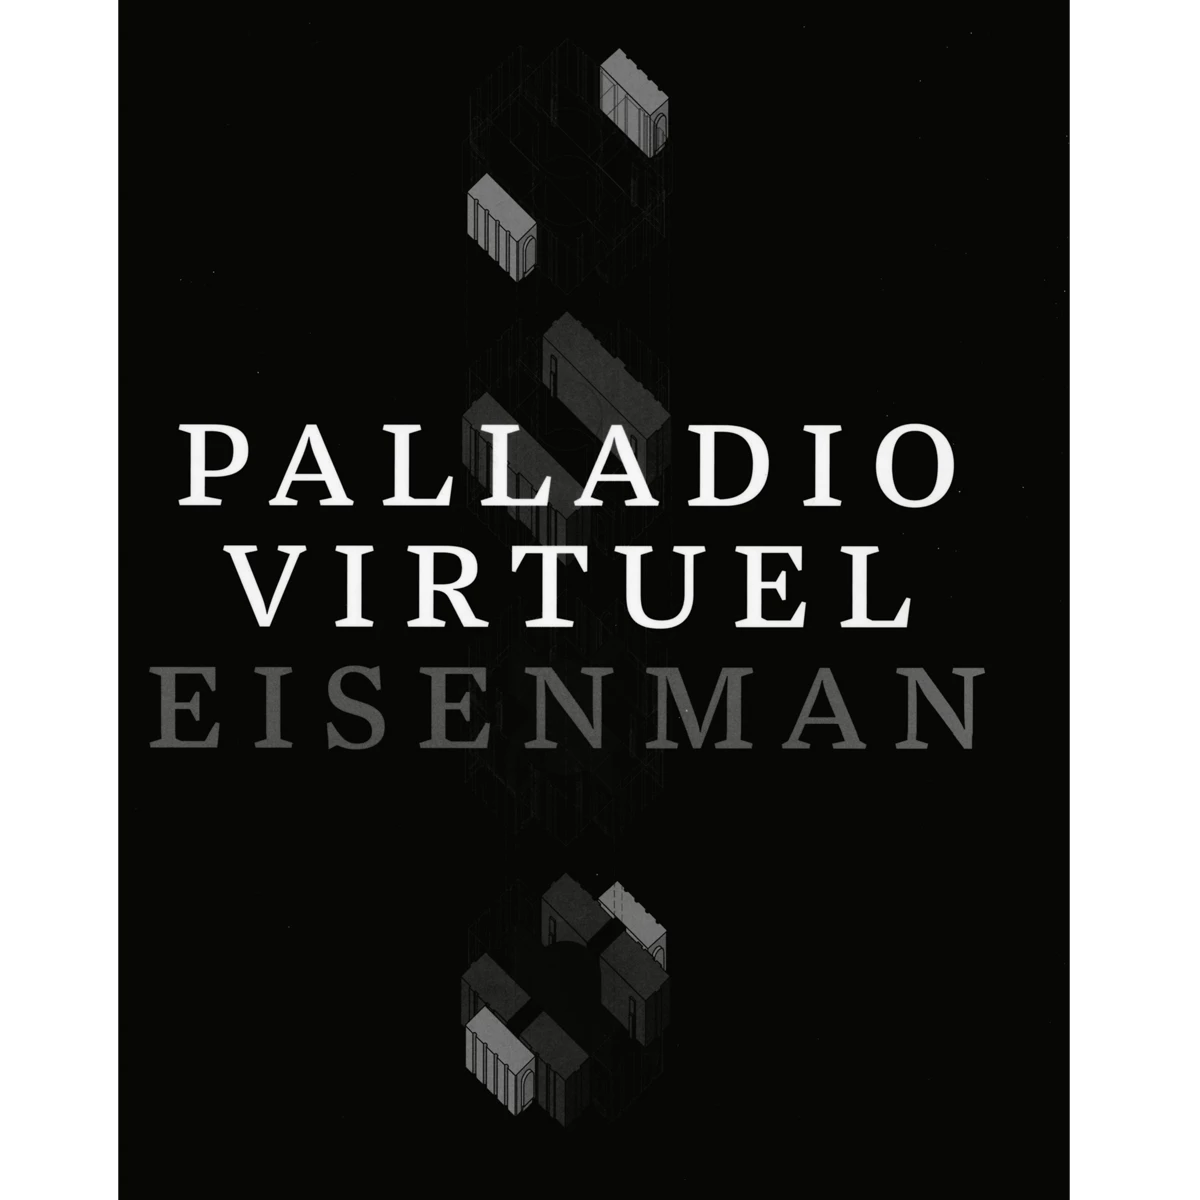 Palladio Virtuel